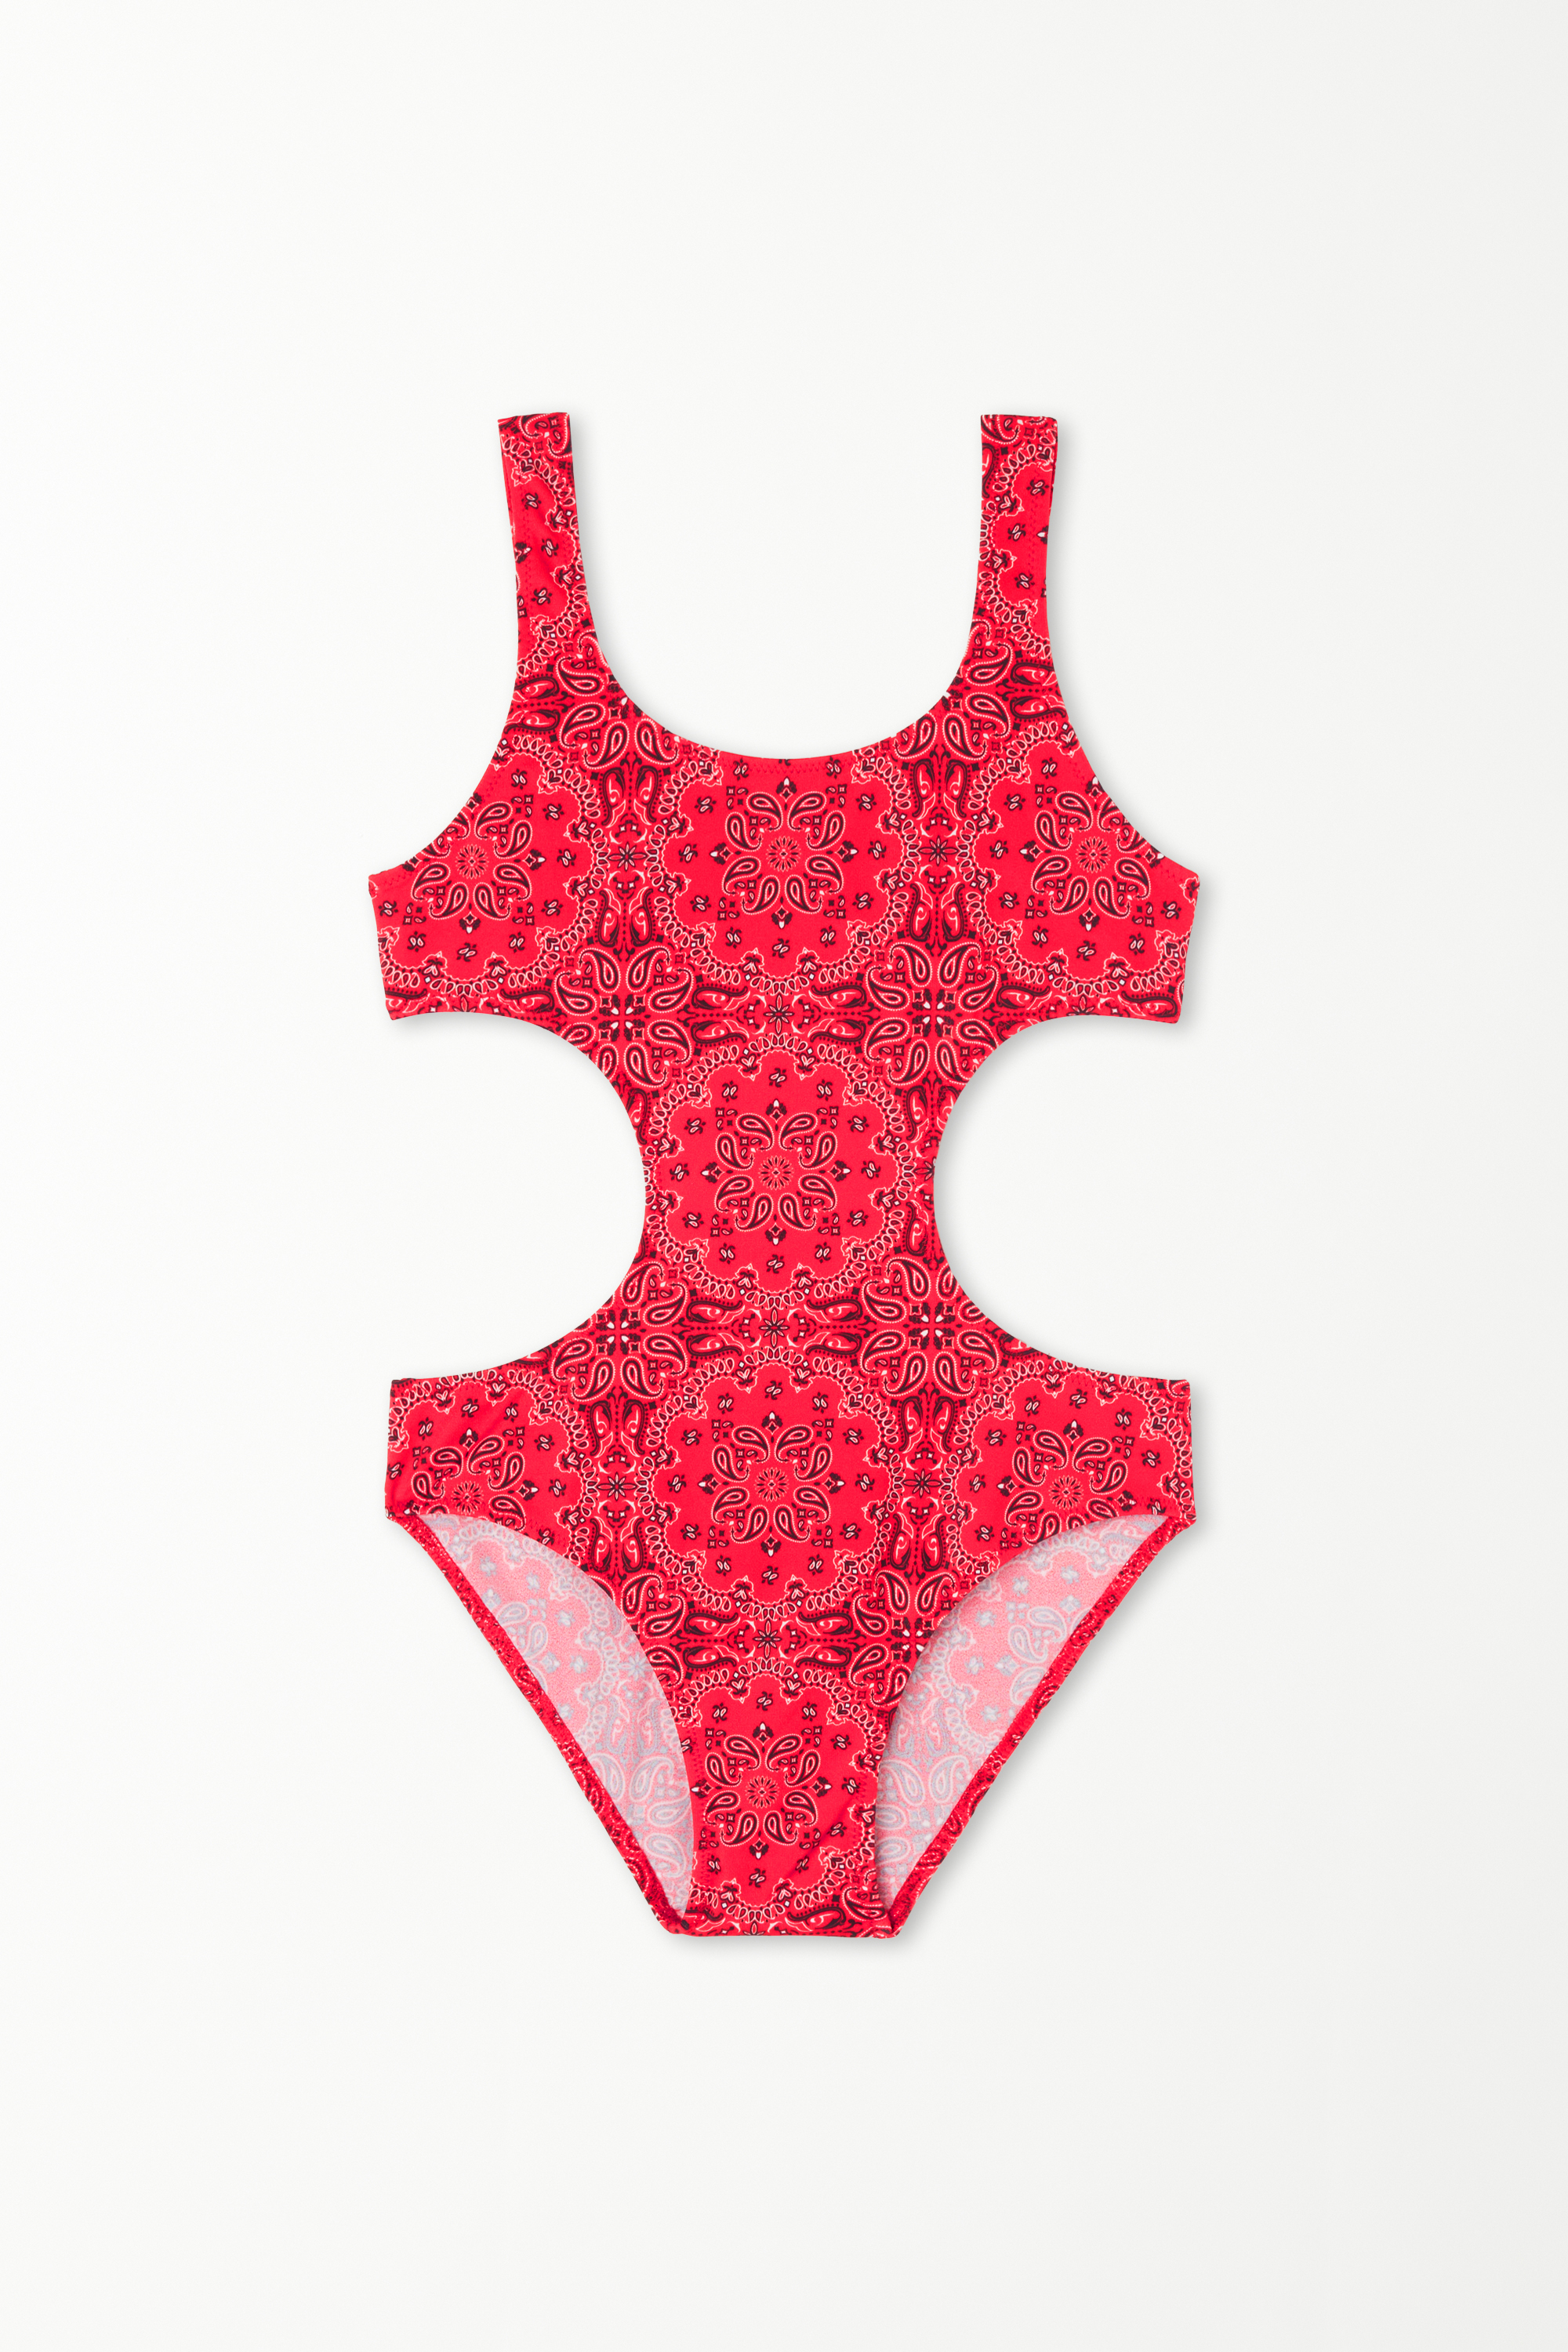 Trikini-Badeanzug in Rot mit Bandanaprint für Mädchen